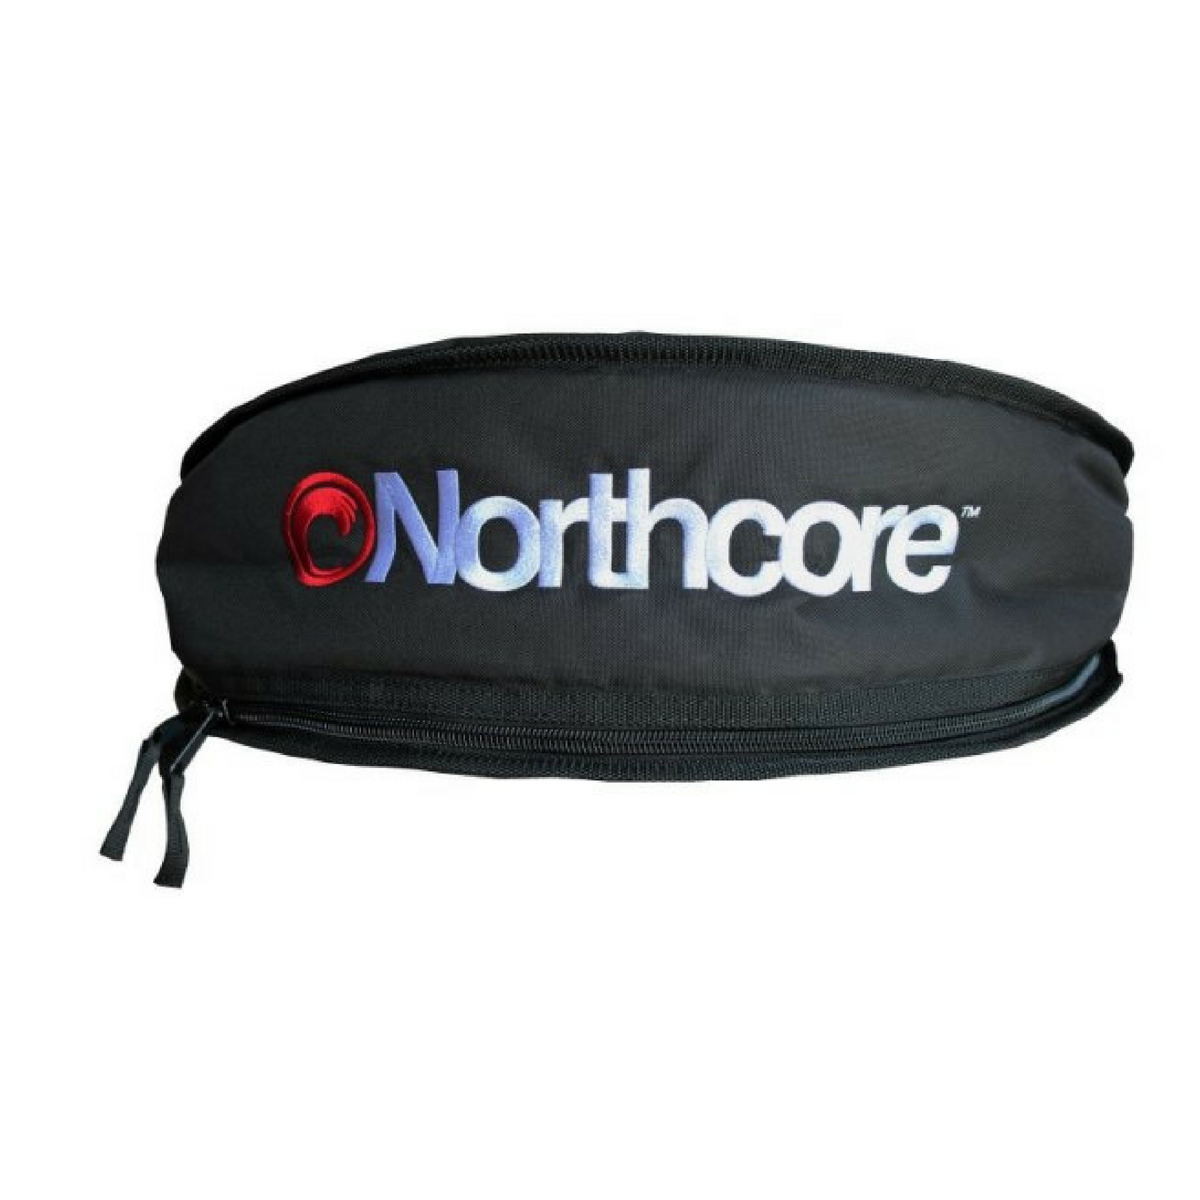 northcore-board-jacket-longboard-surfboard-bag-9-6